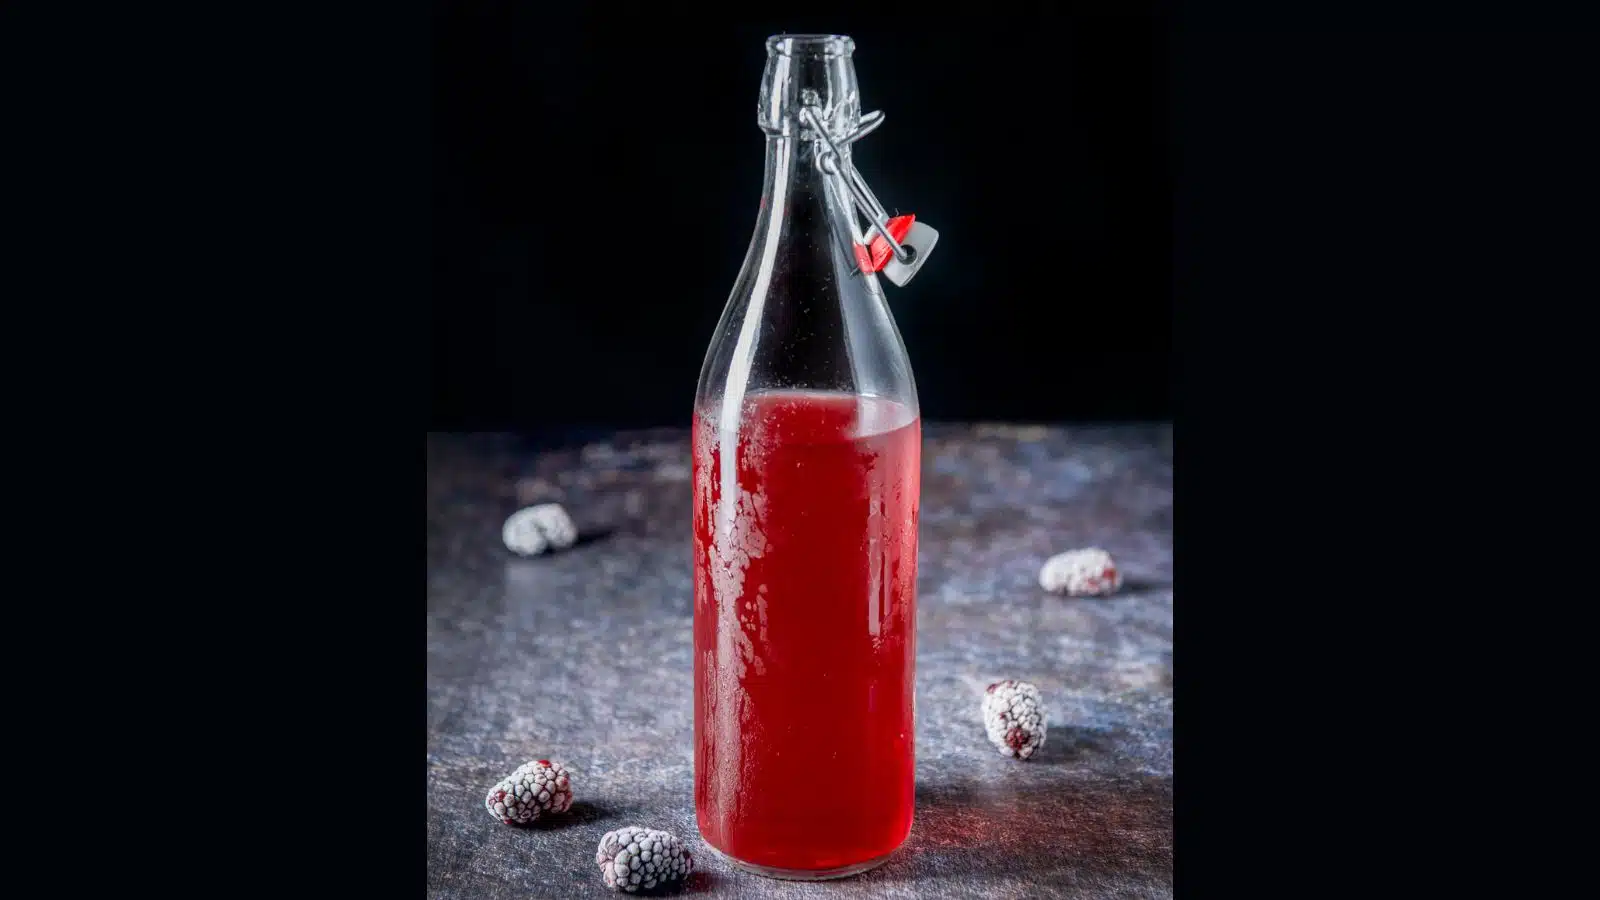 Frozen blackberries on a table with a bottle of blackberry vodka